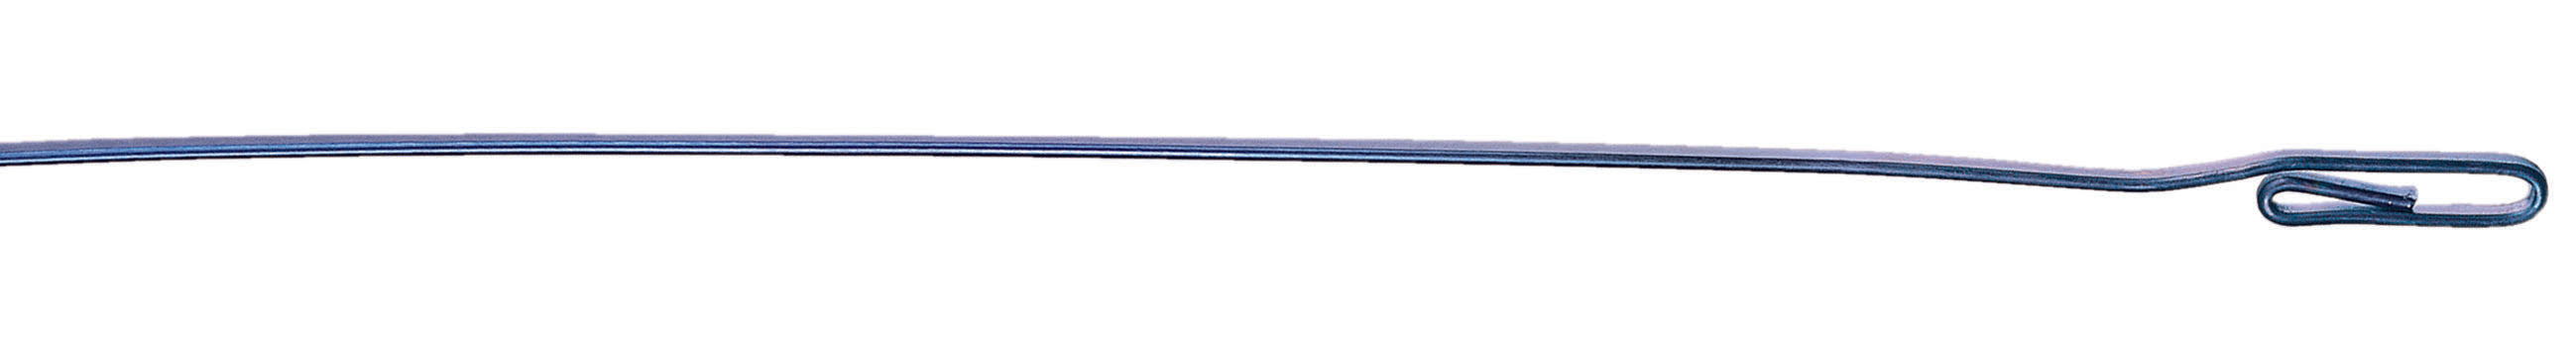 IDEAL Blued-Steel Fish Tape Tuff-Grip, Pro Case, 50'x1/8", Model 31-033